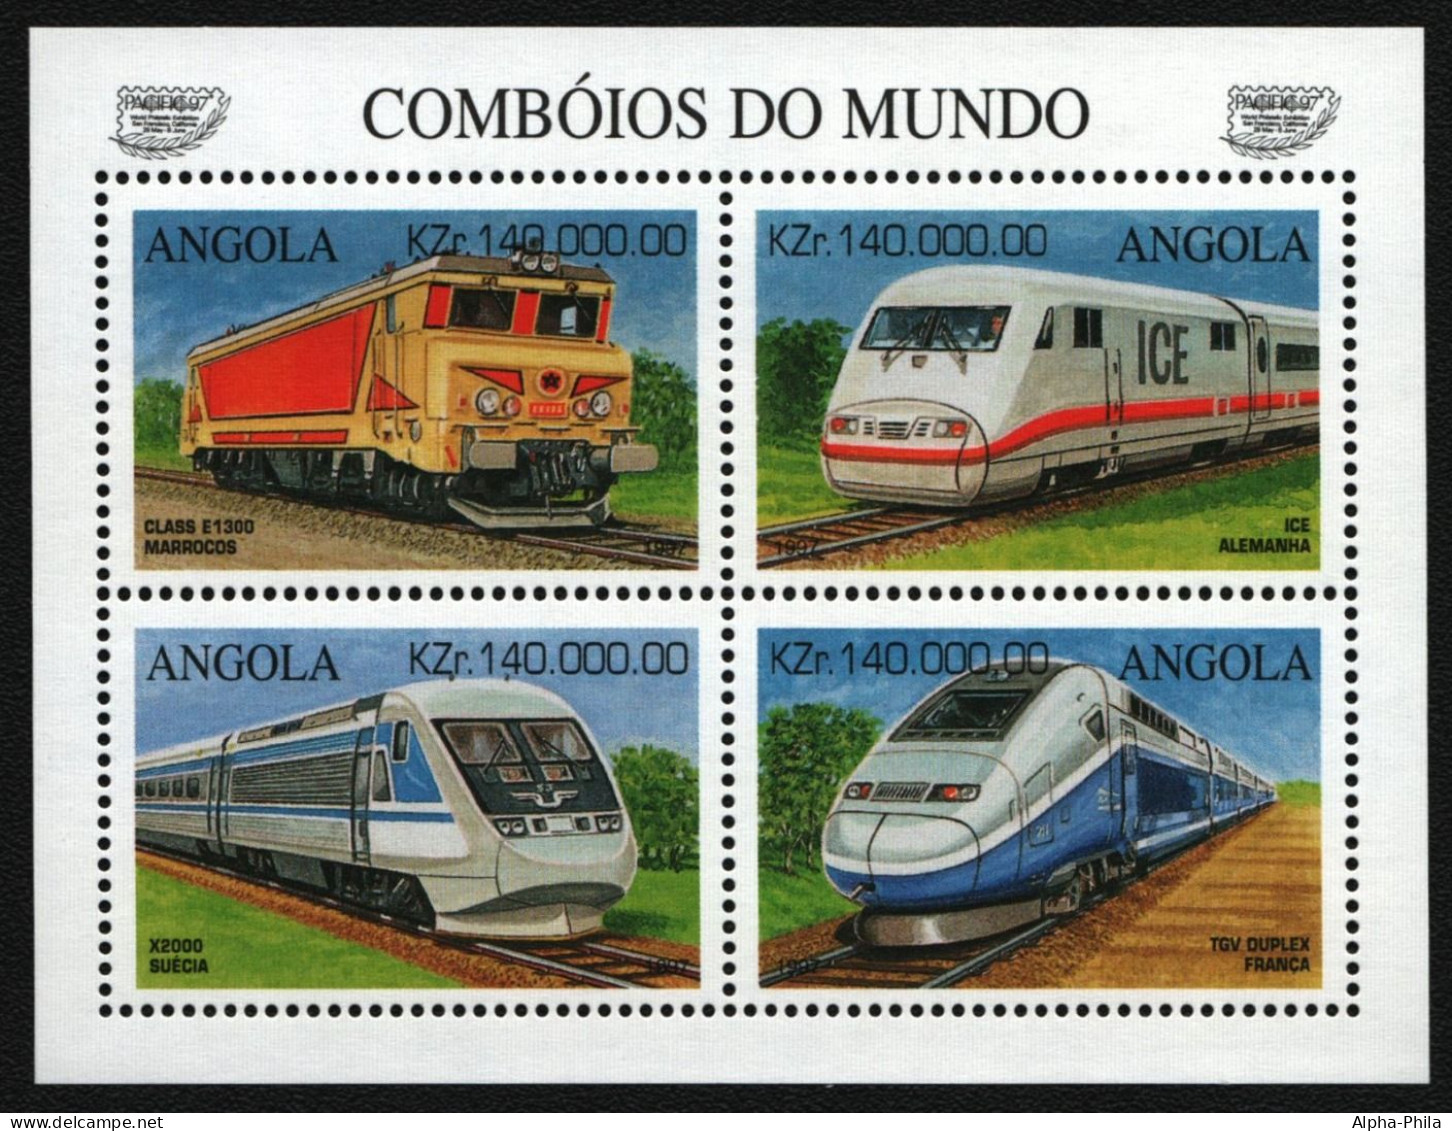 Angola 1997 - Mi-Nr. 1114-1117 ** - MNH - Eisenbahn / Trains - Angola